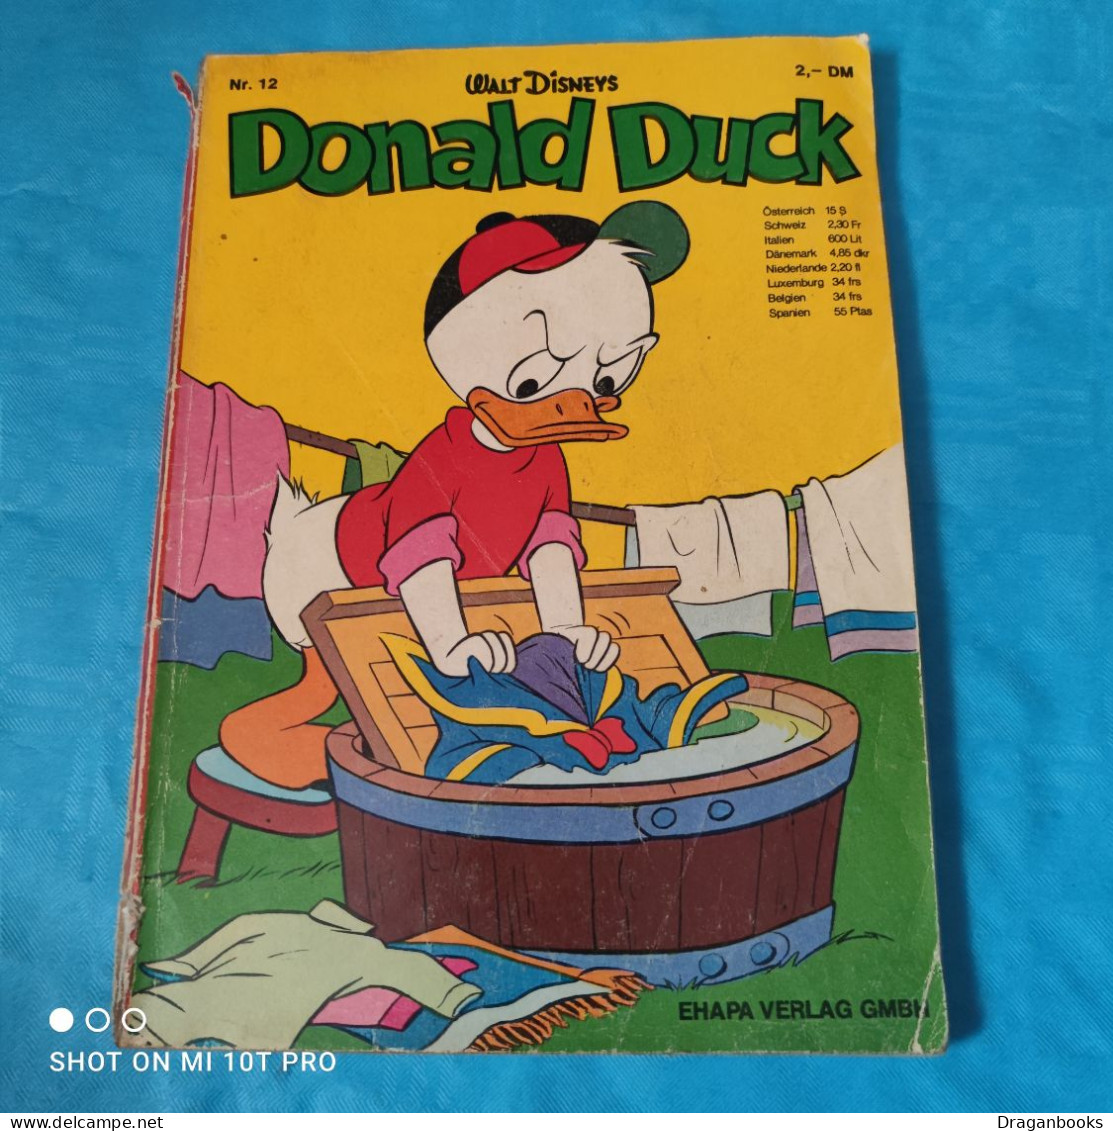 Donald Duck Nr. 12 - Walt Disney